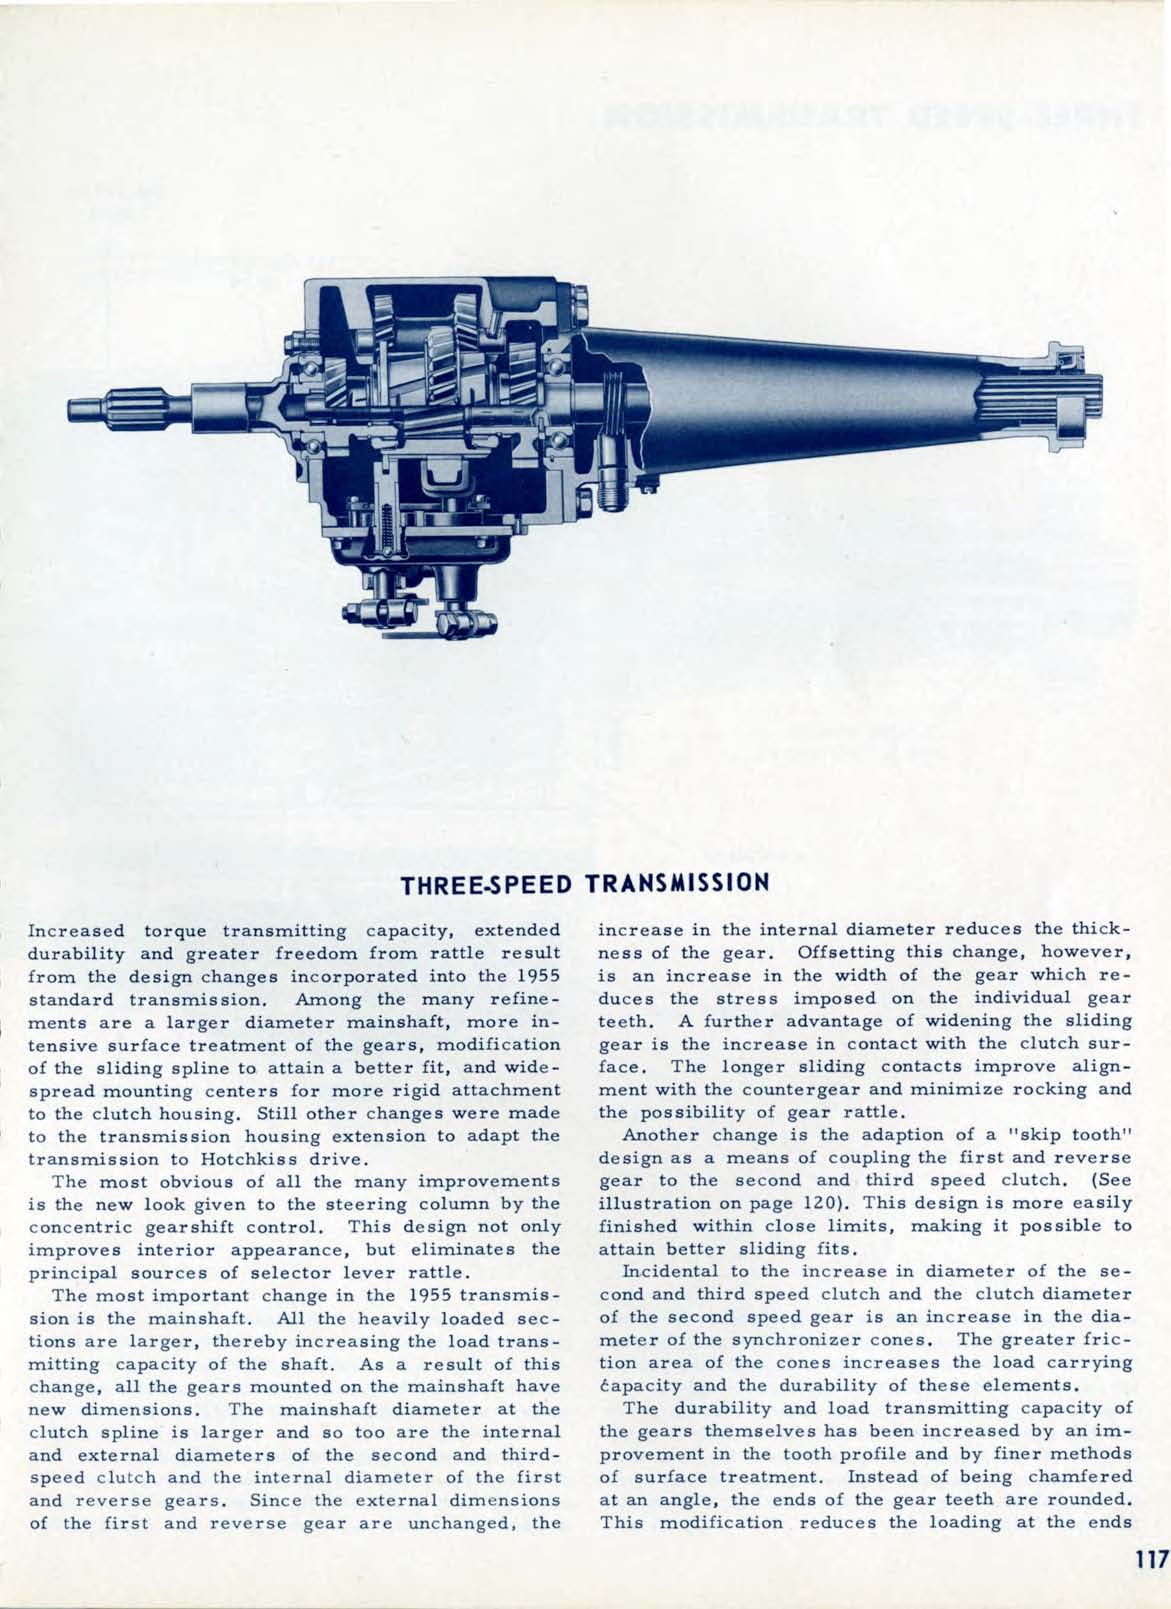 1955_Chevrolet_Engineering_Features-117